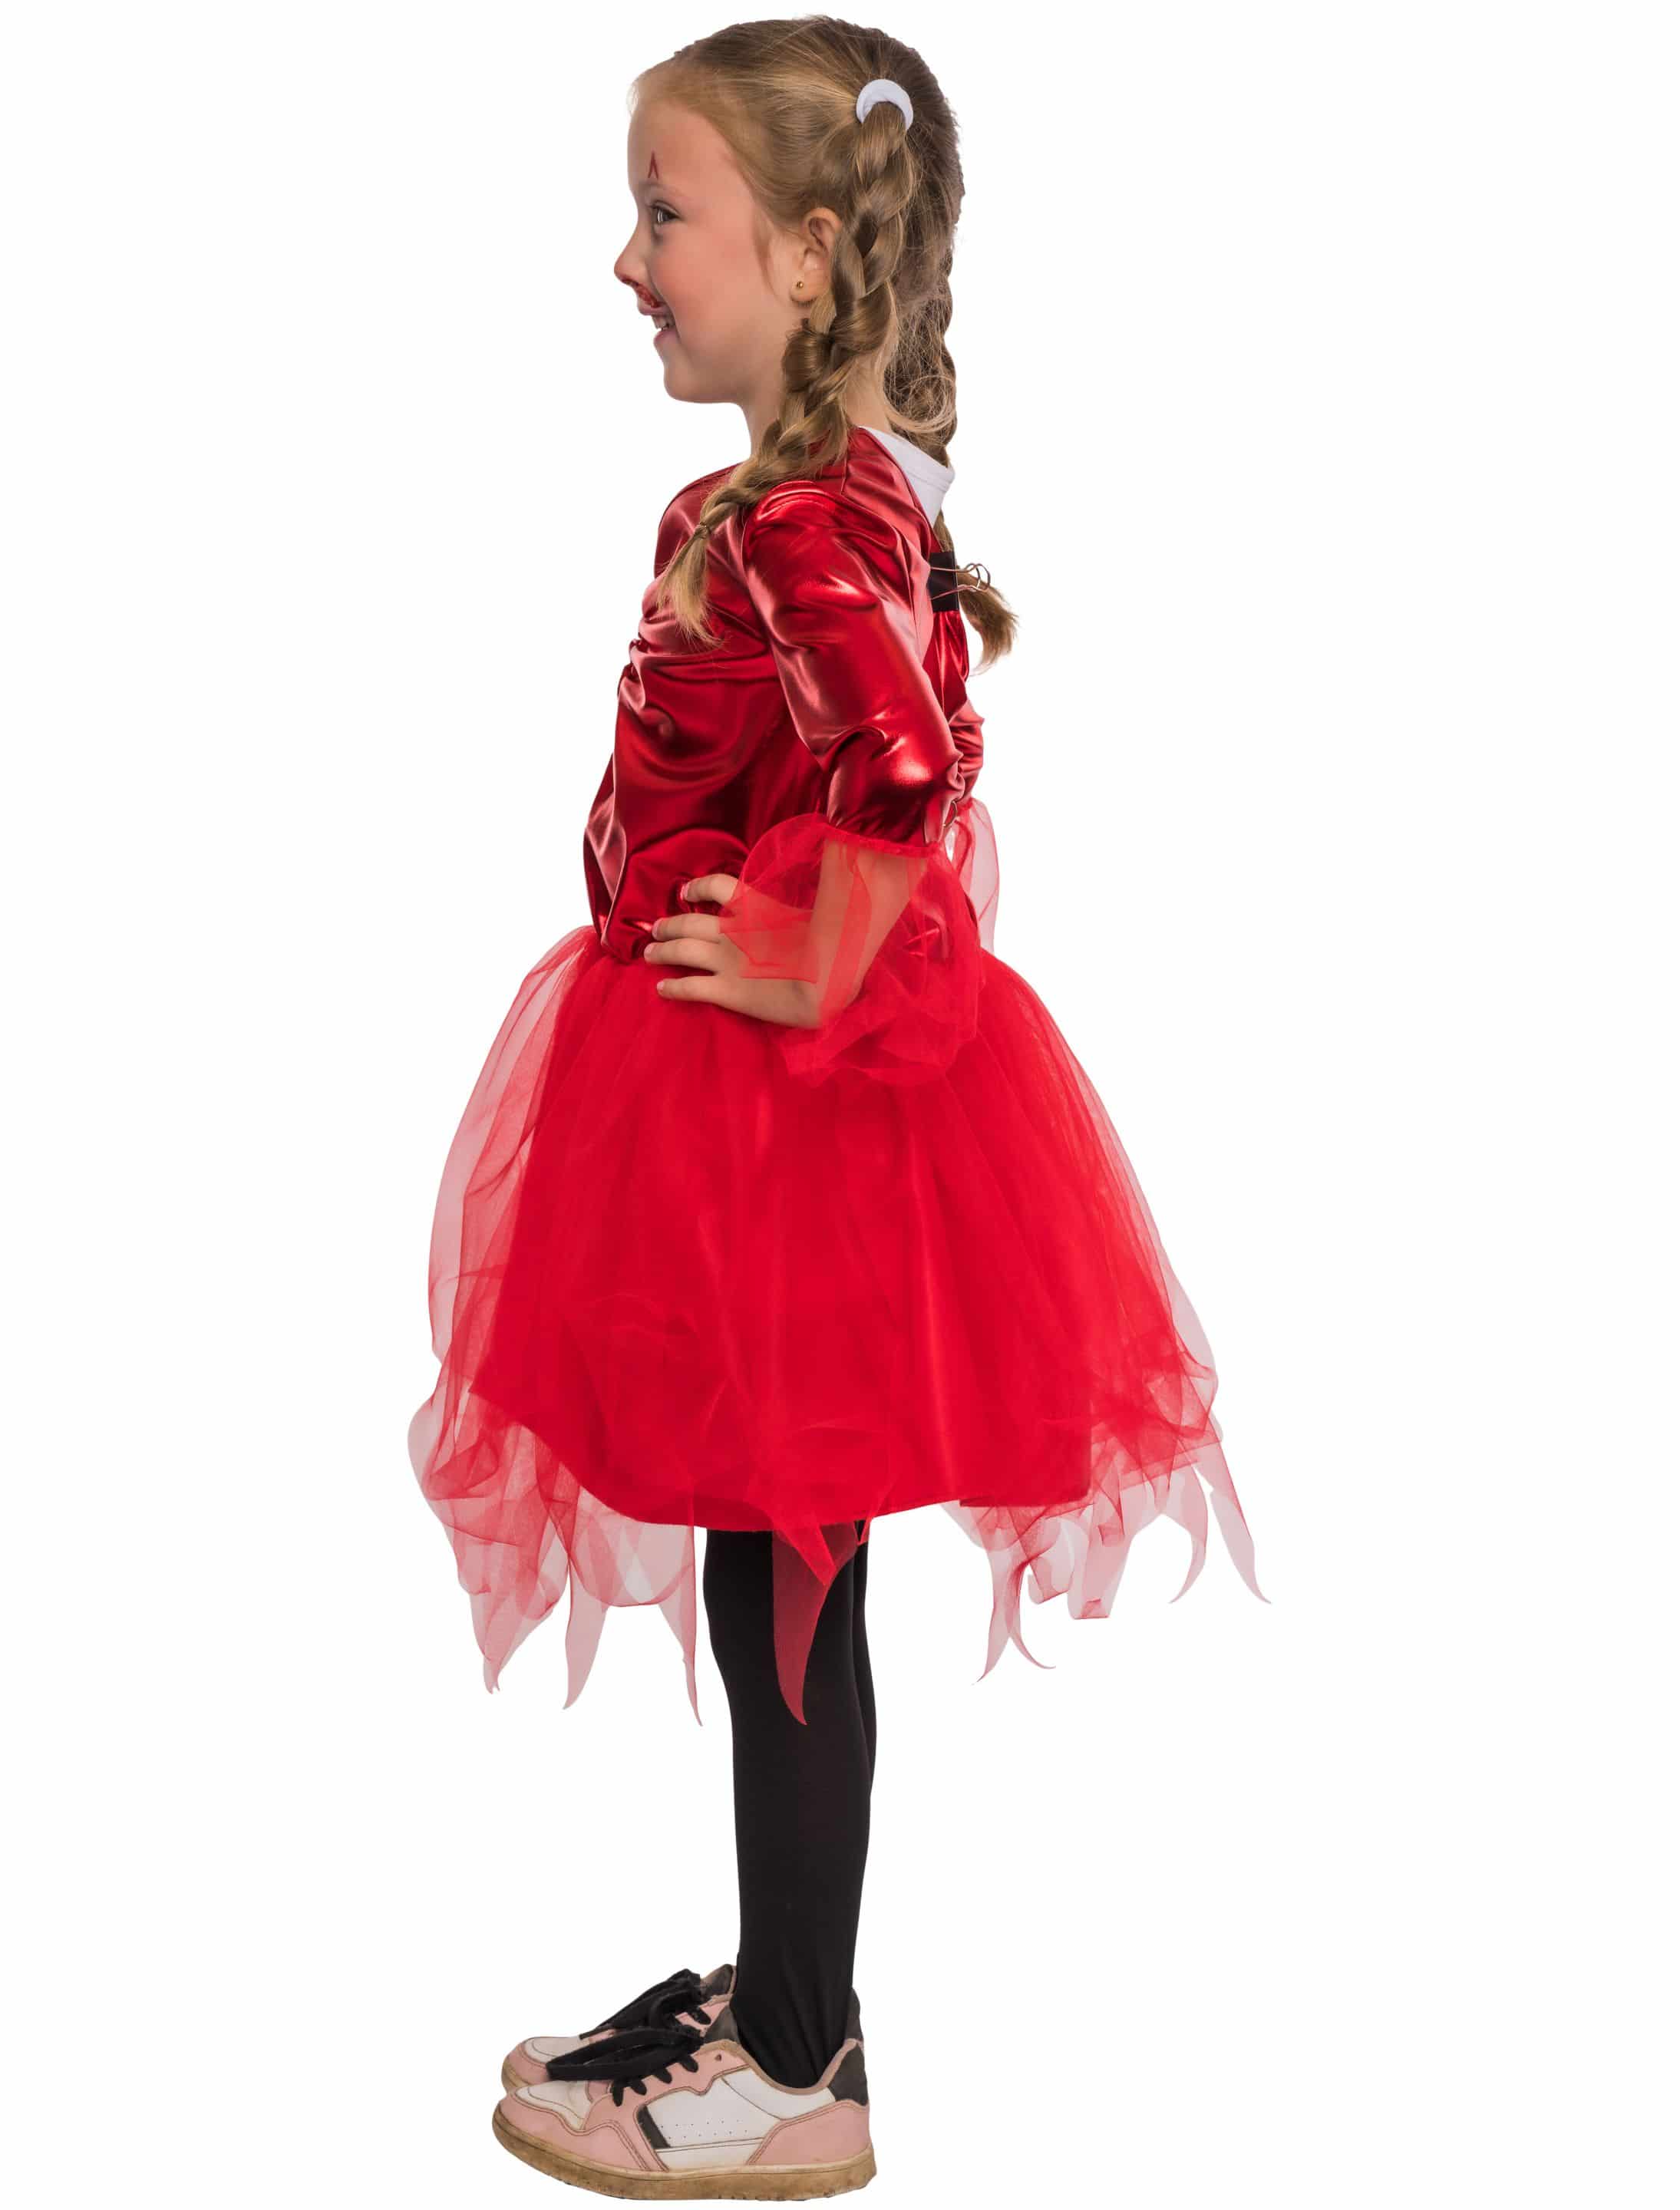 Kleid Teufel metallic mit Tüll  Kinder rot 152